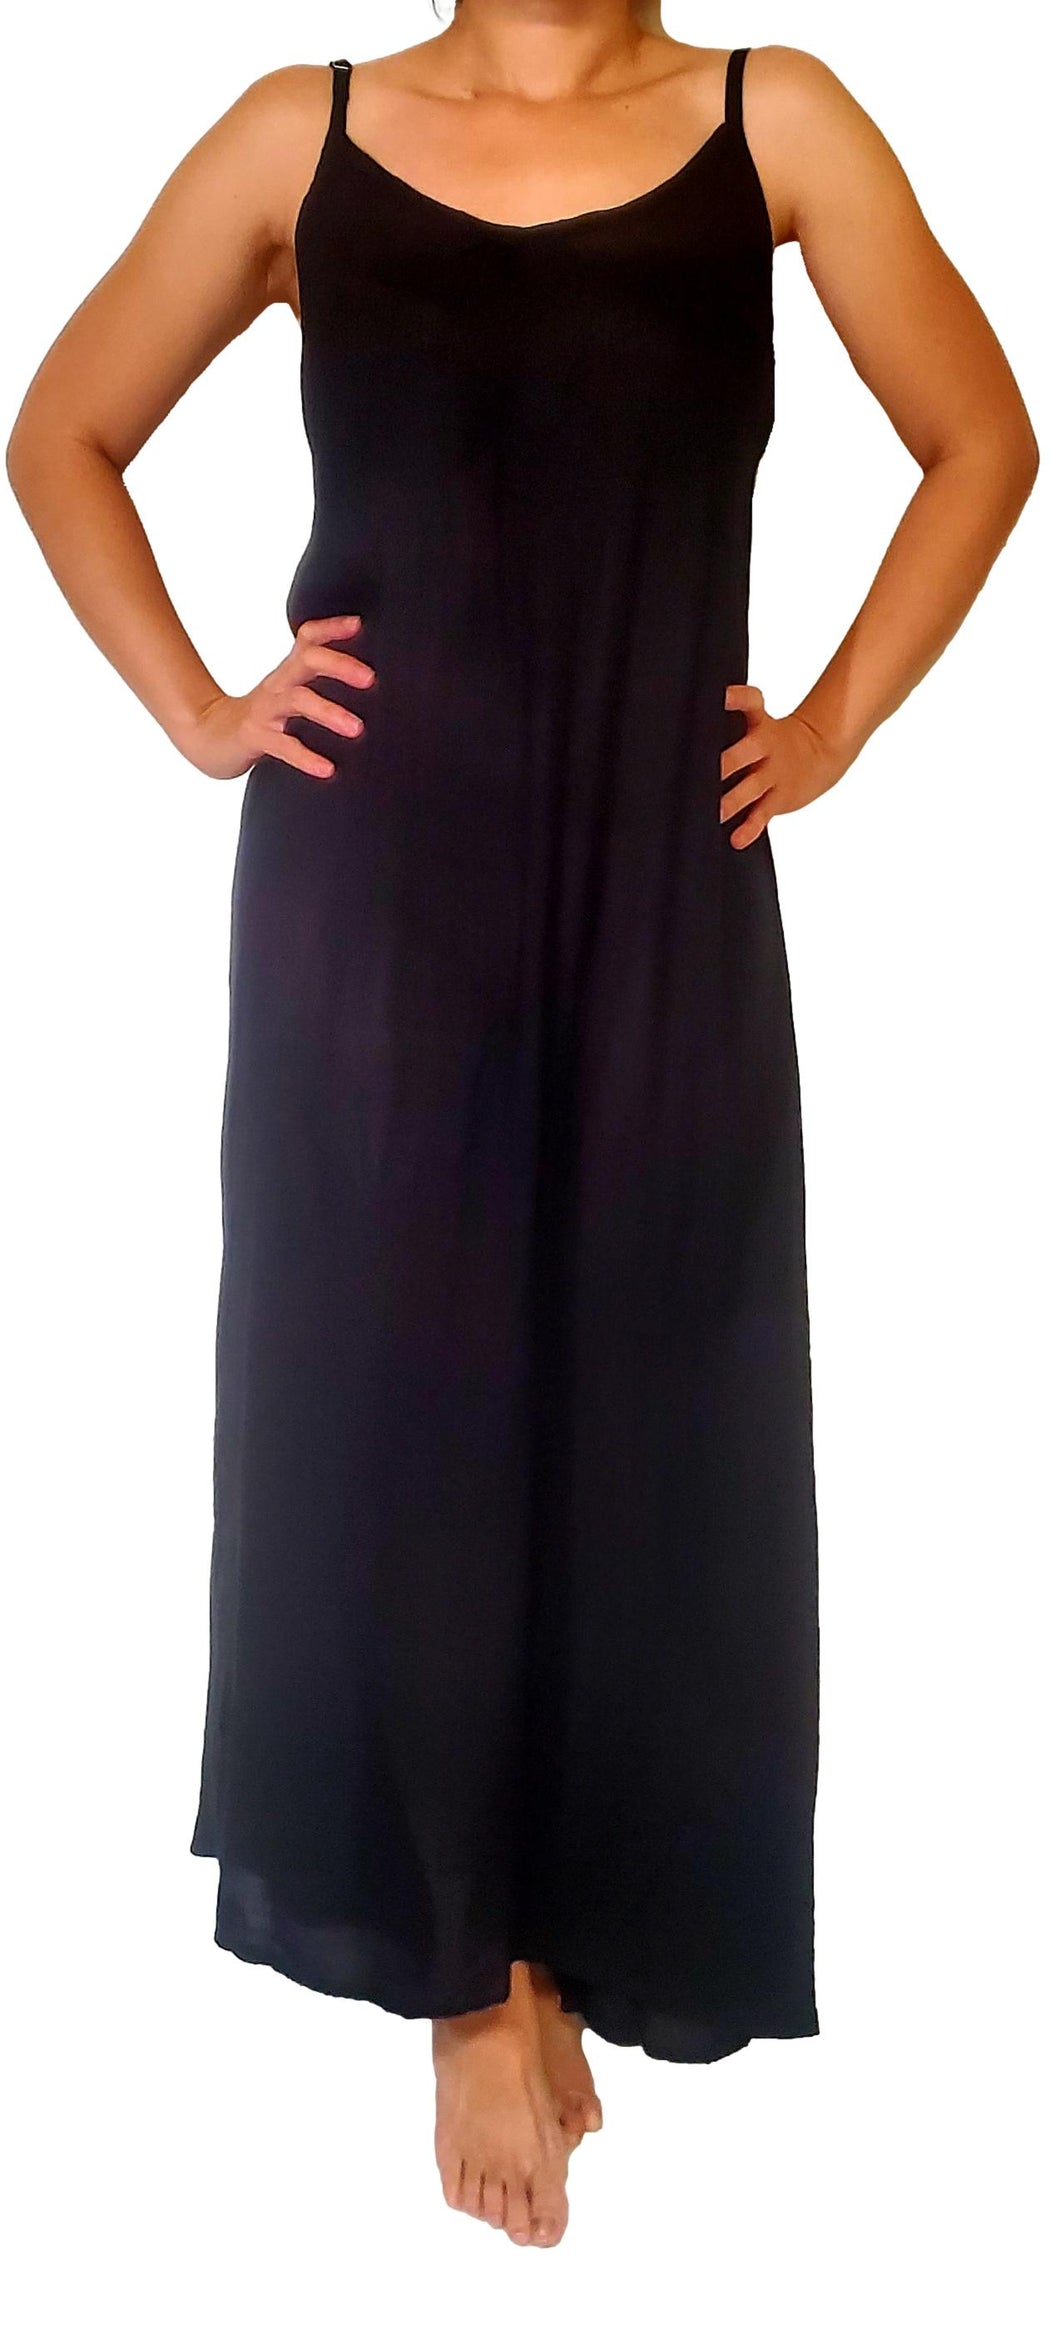 Bali Dress - Long - Solid Black